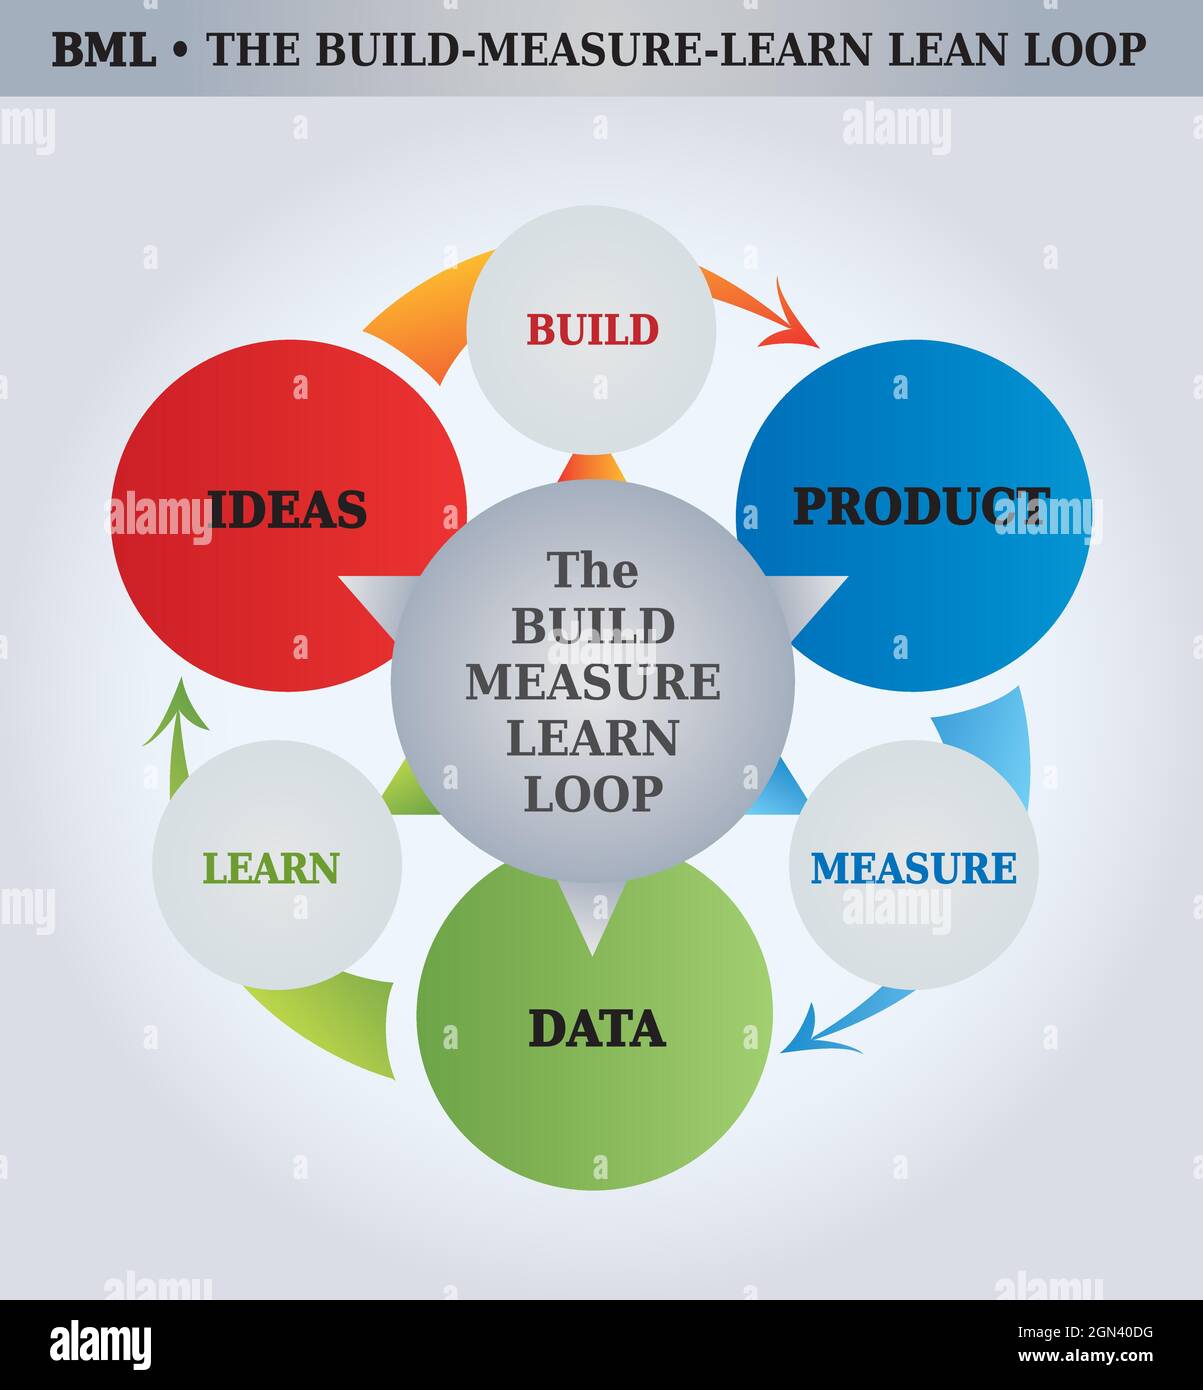 Build-Measure-Learn Lean Loop Model - Diagram - 3 Stages - 3 Steps - Coaching Tool Stock Vector